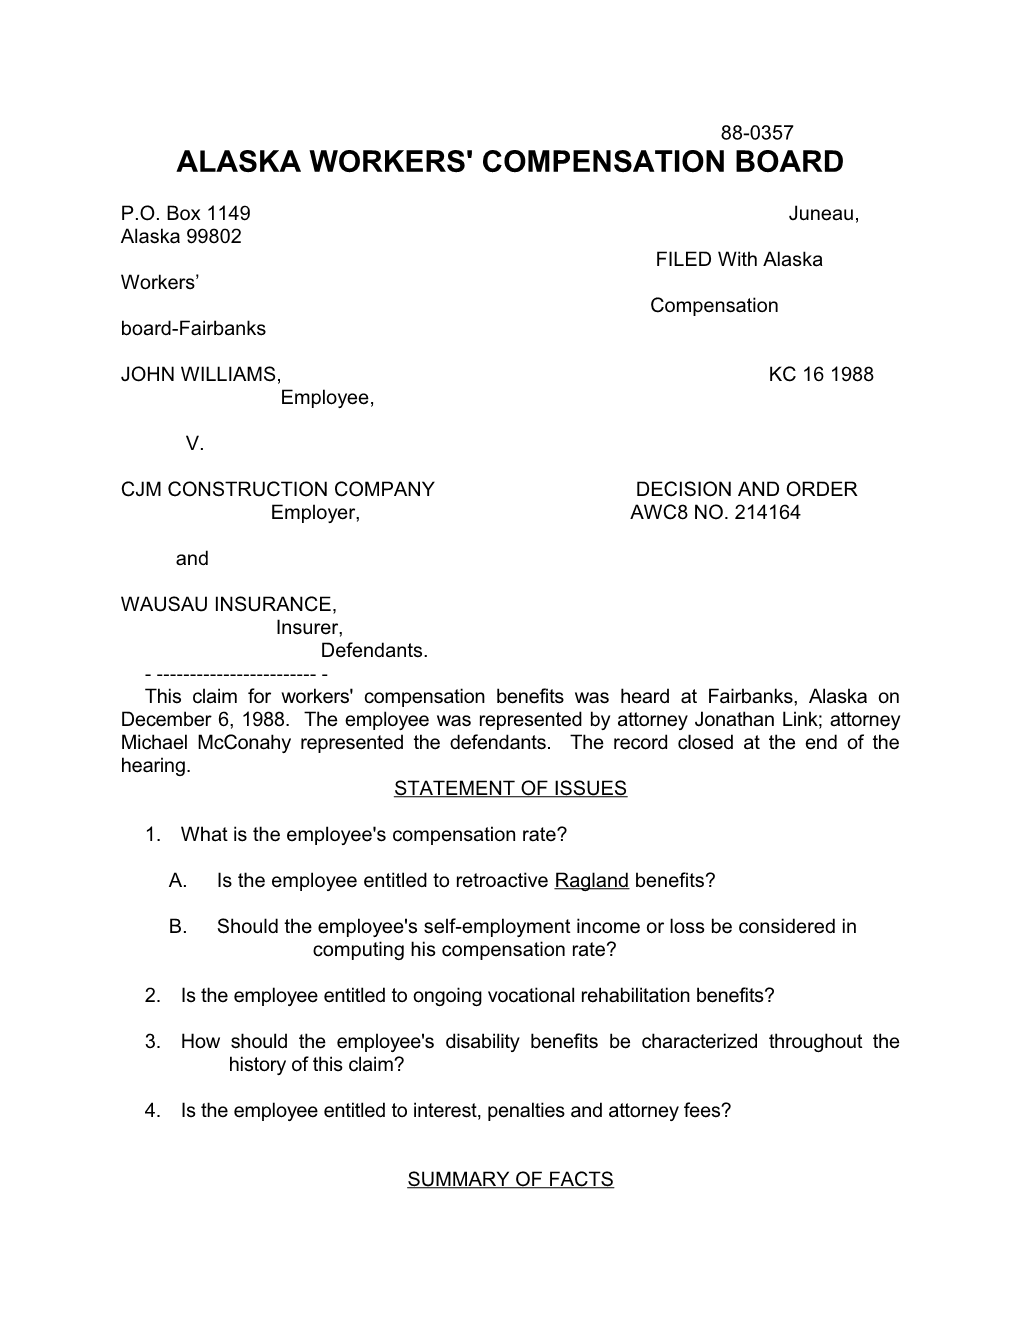 Alaska Workers' Compensation Board s34